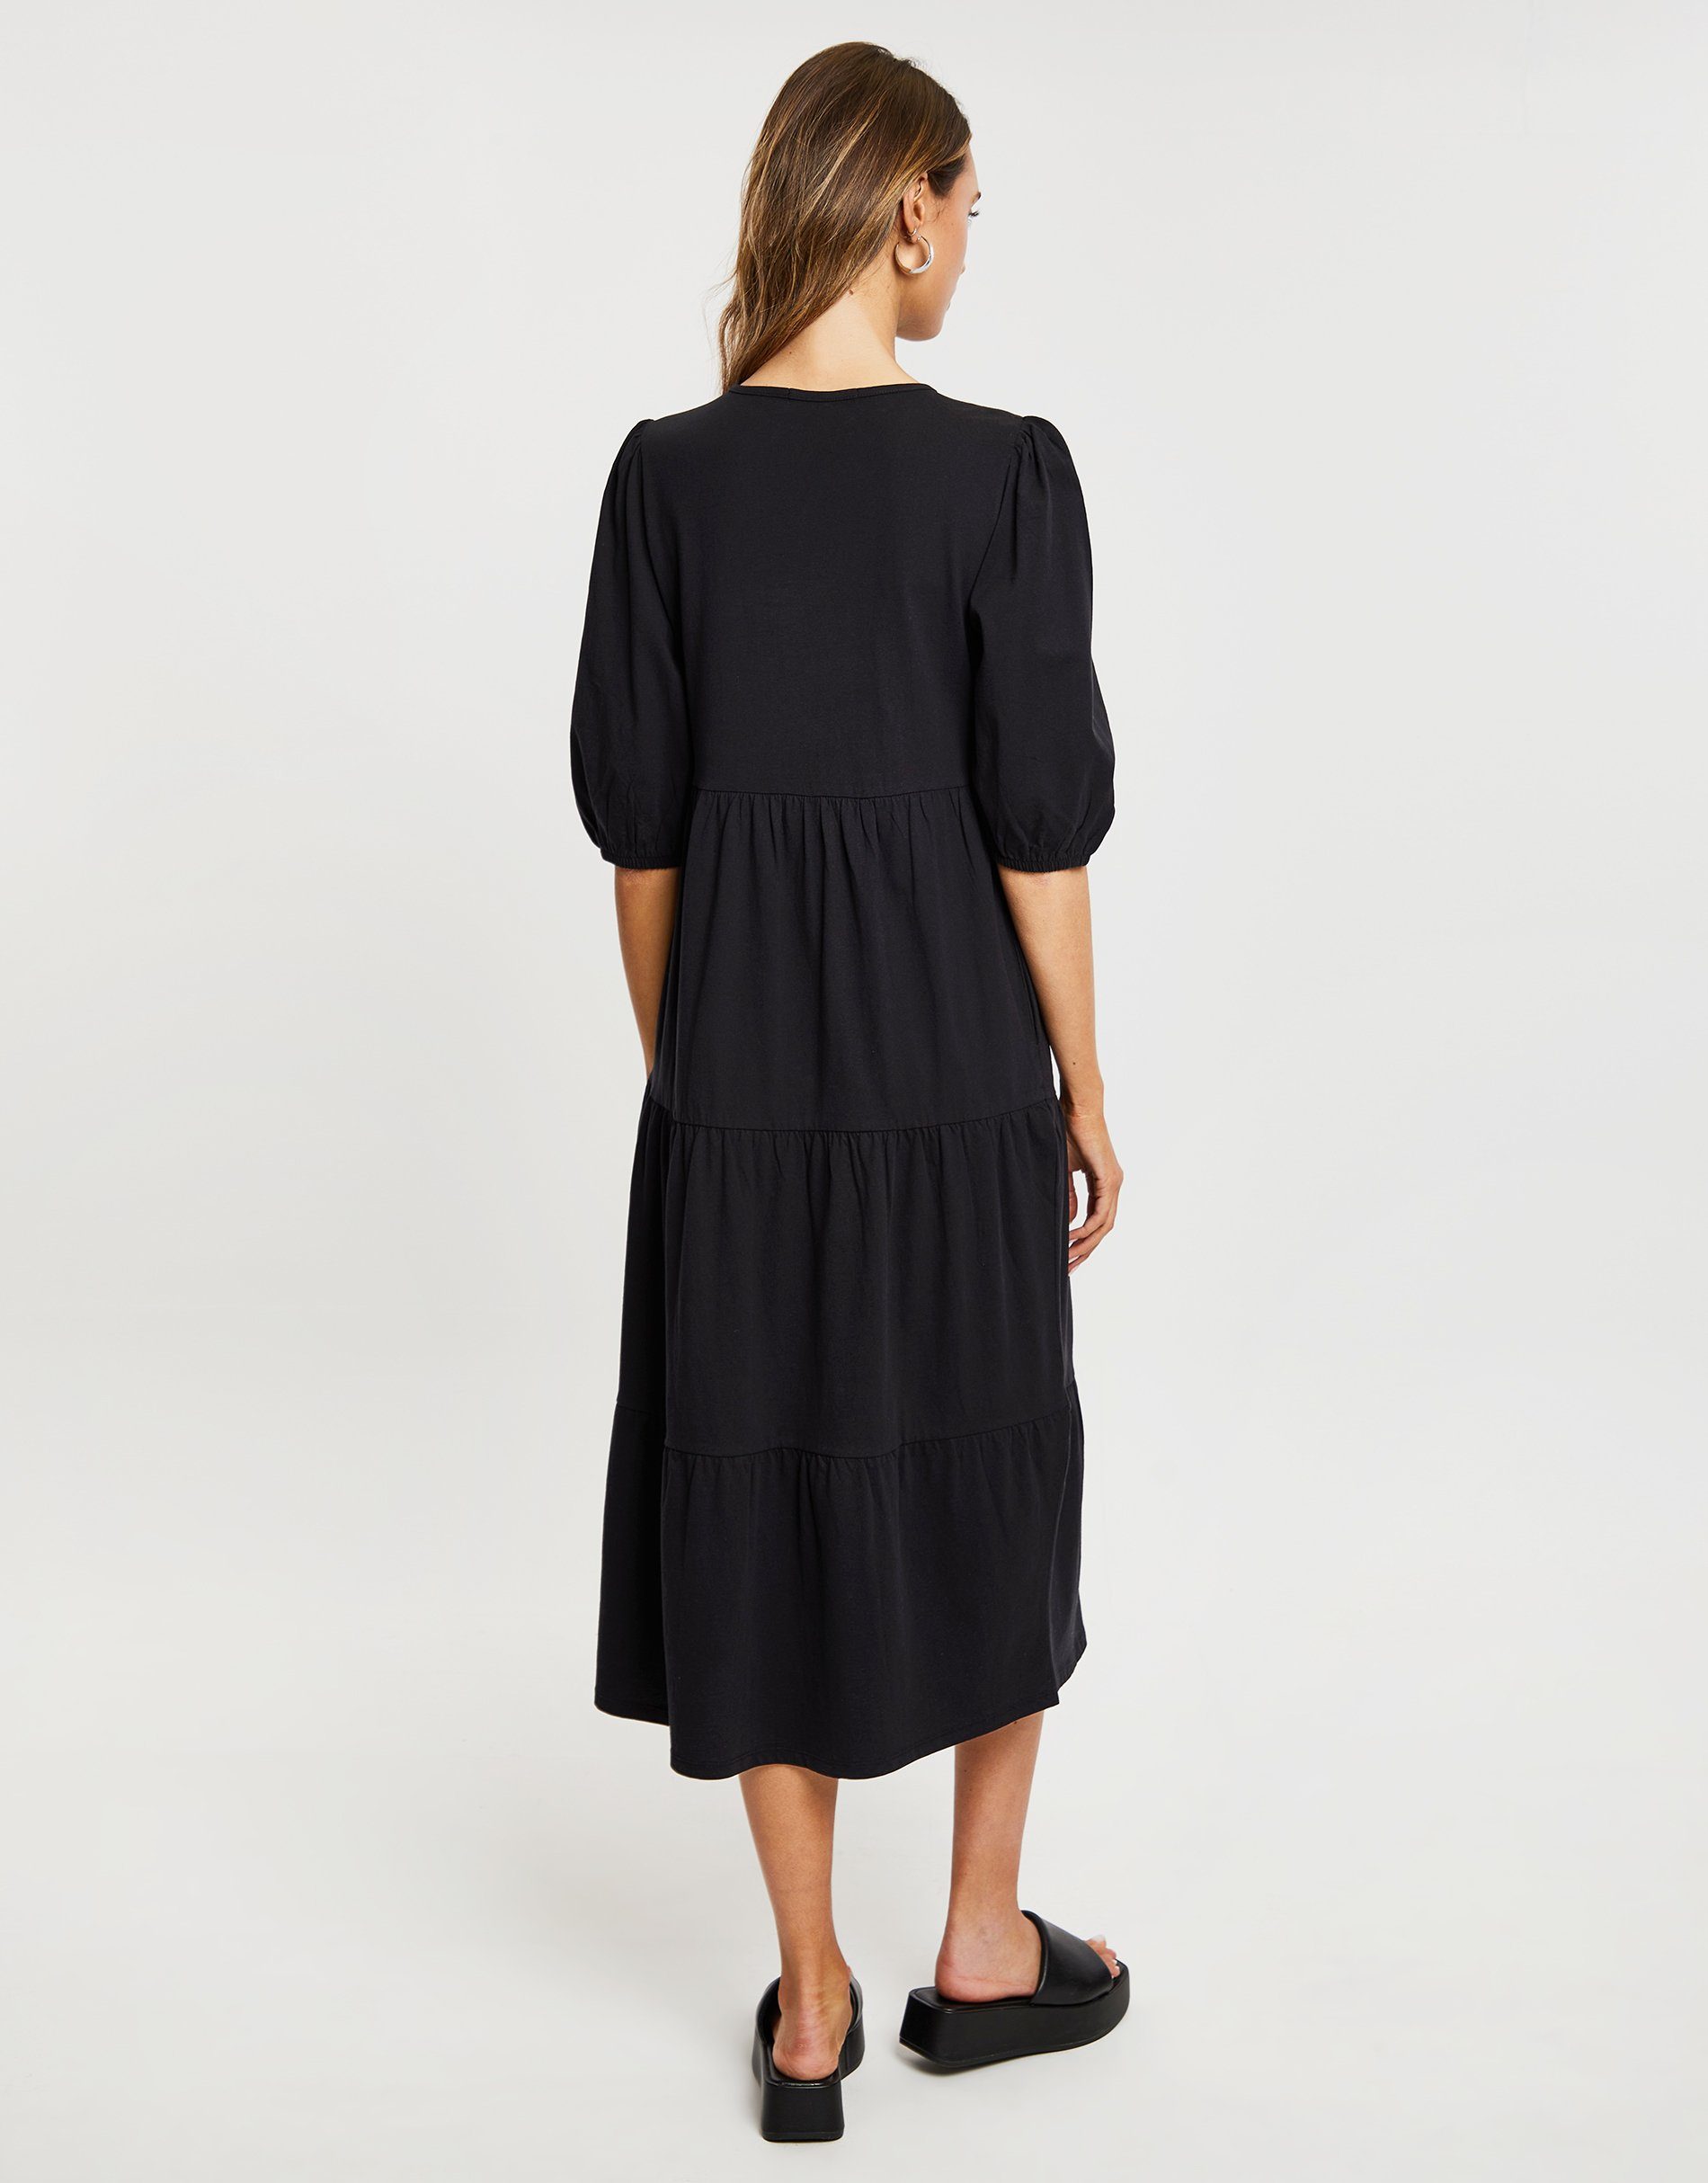 Threadbare THB Midi Sommerkleid Black Dress schwarz Finn - Tiered